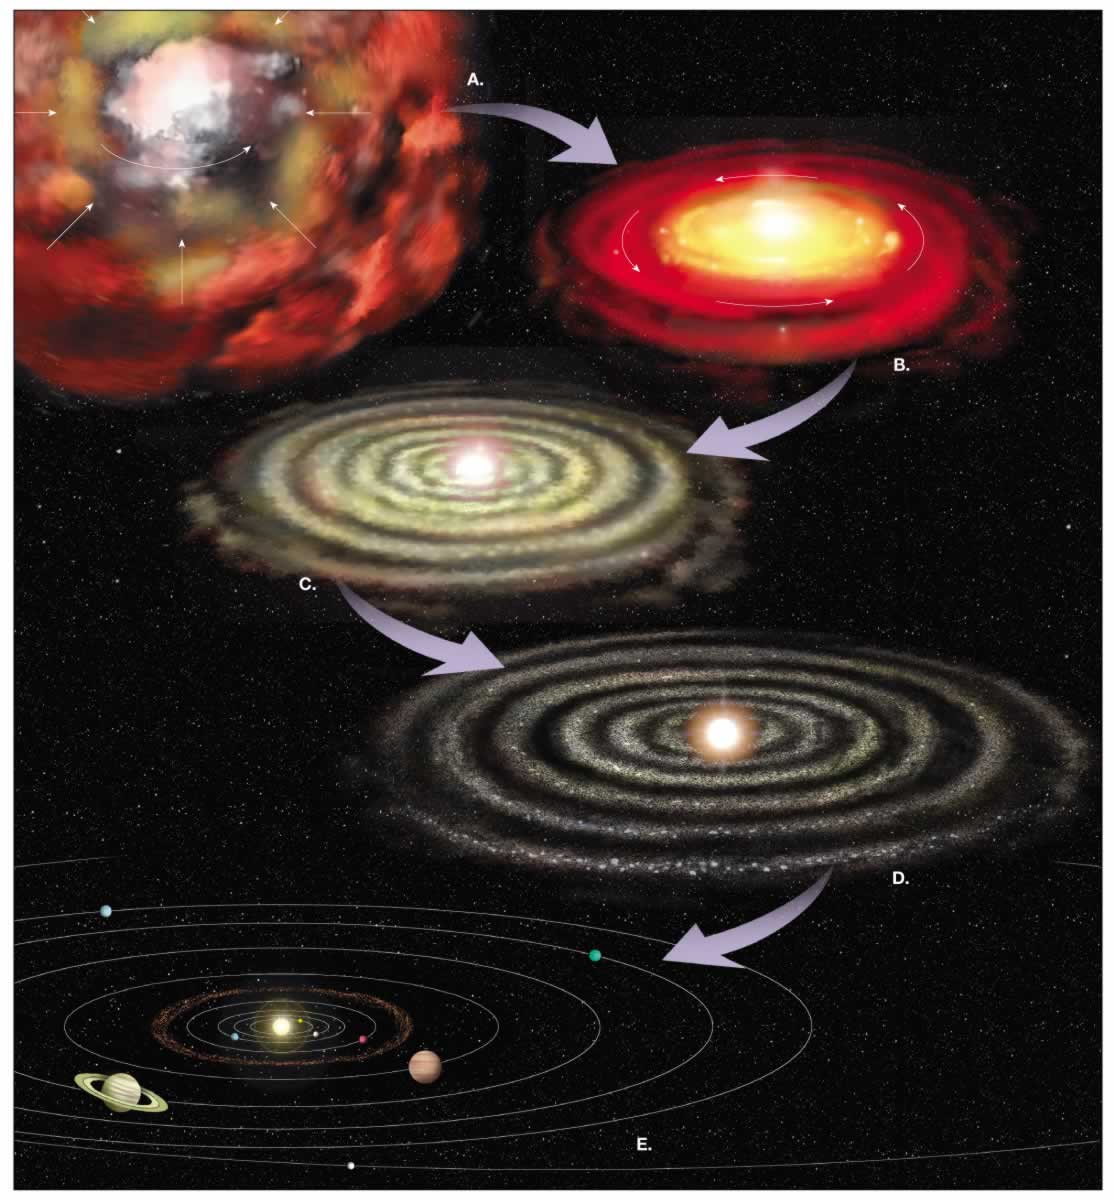 http://pics-about-space.com/nebula-collapse-diagram?p=5#